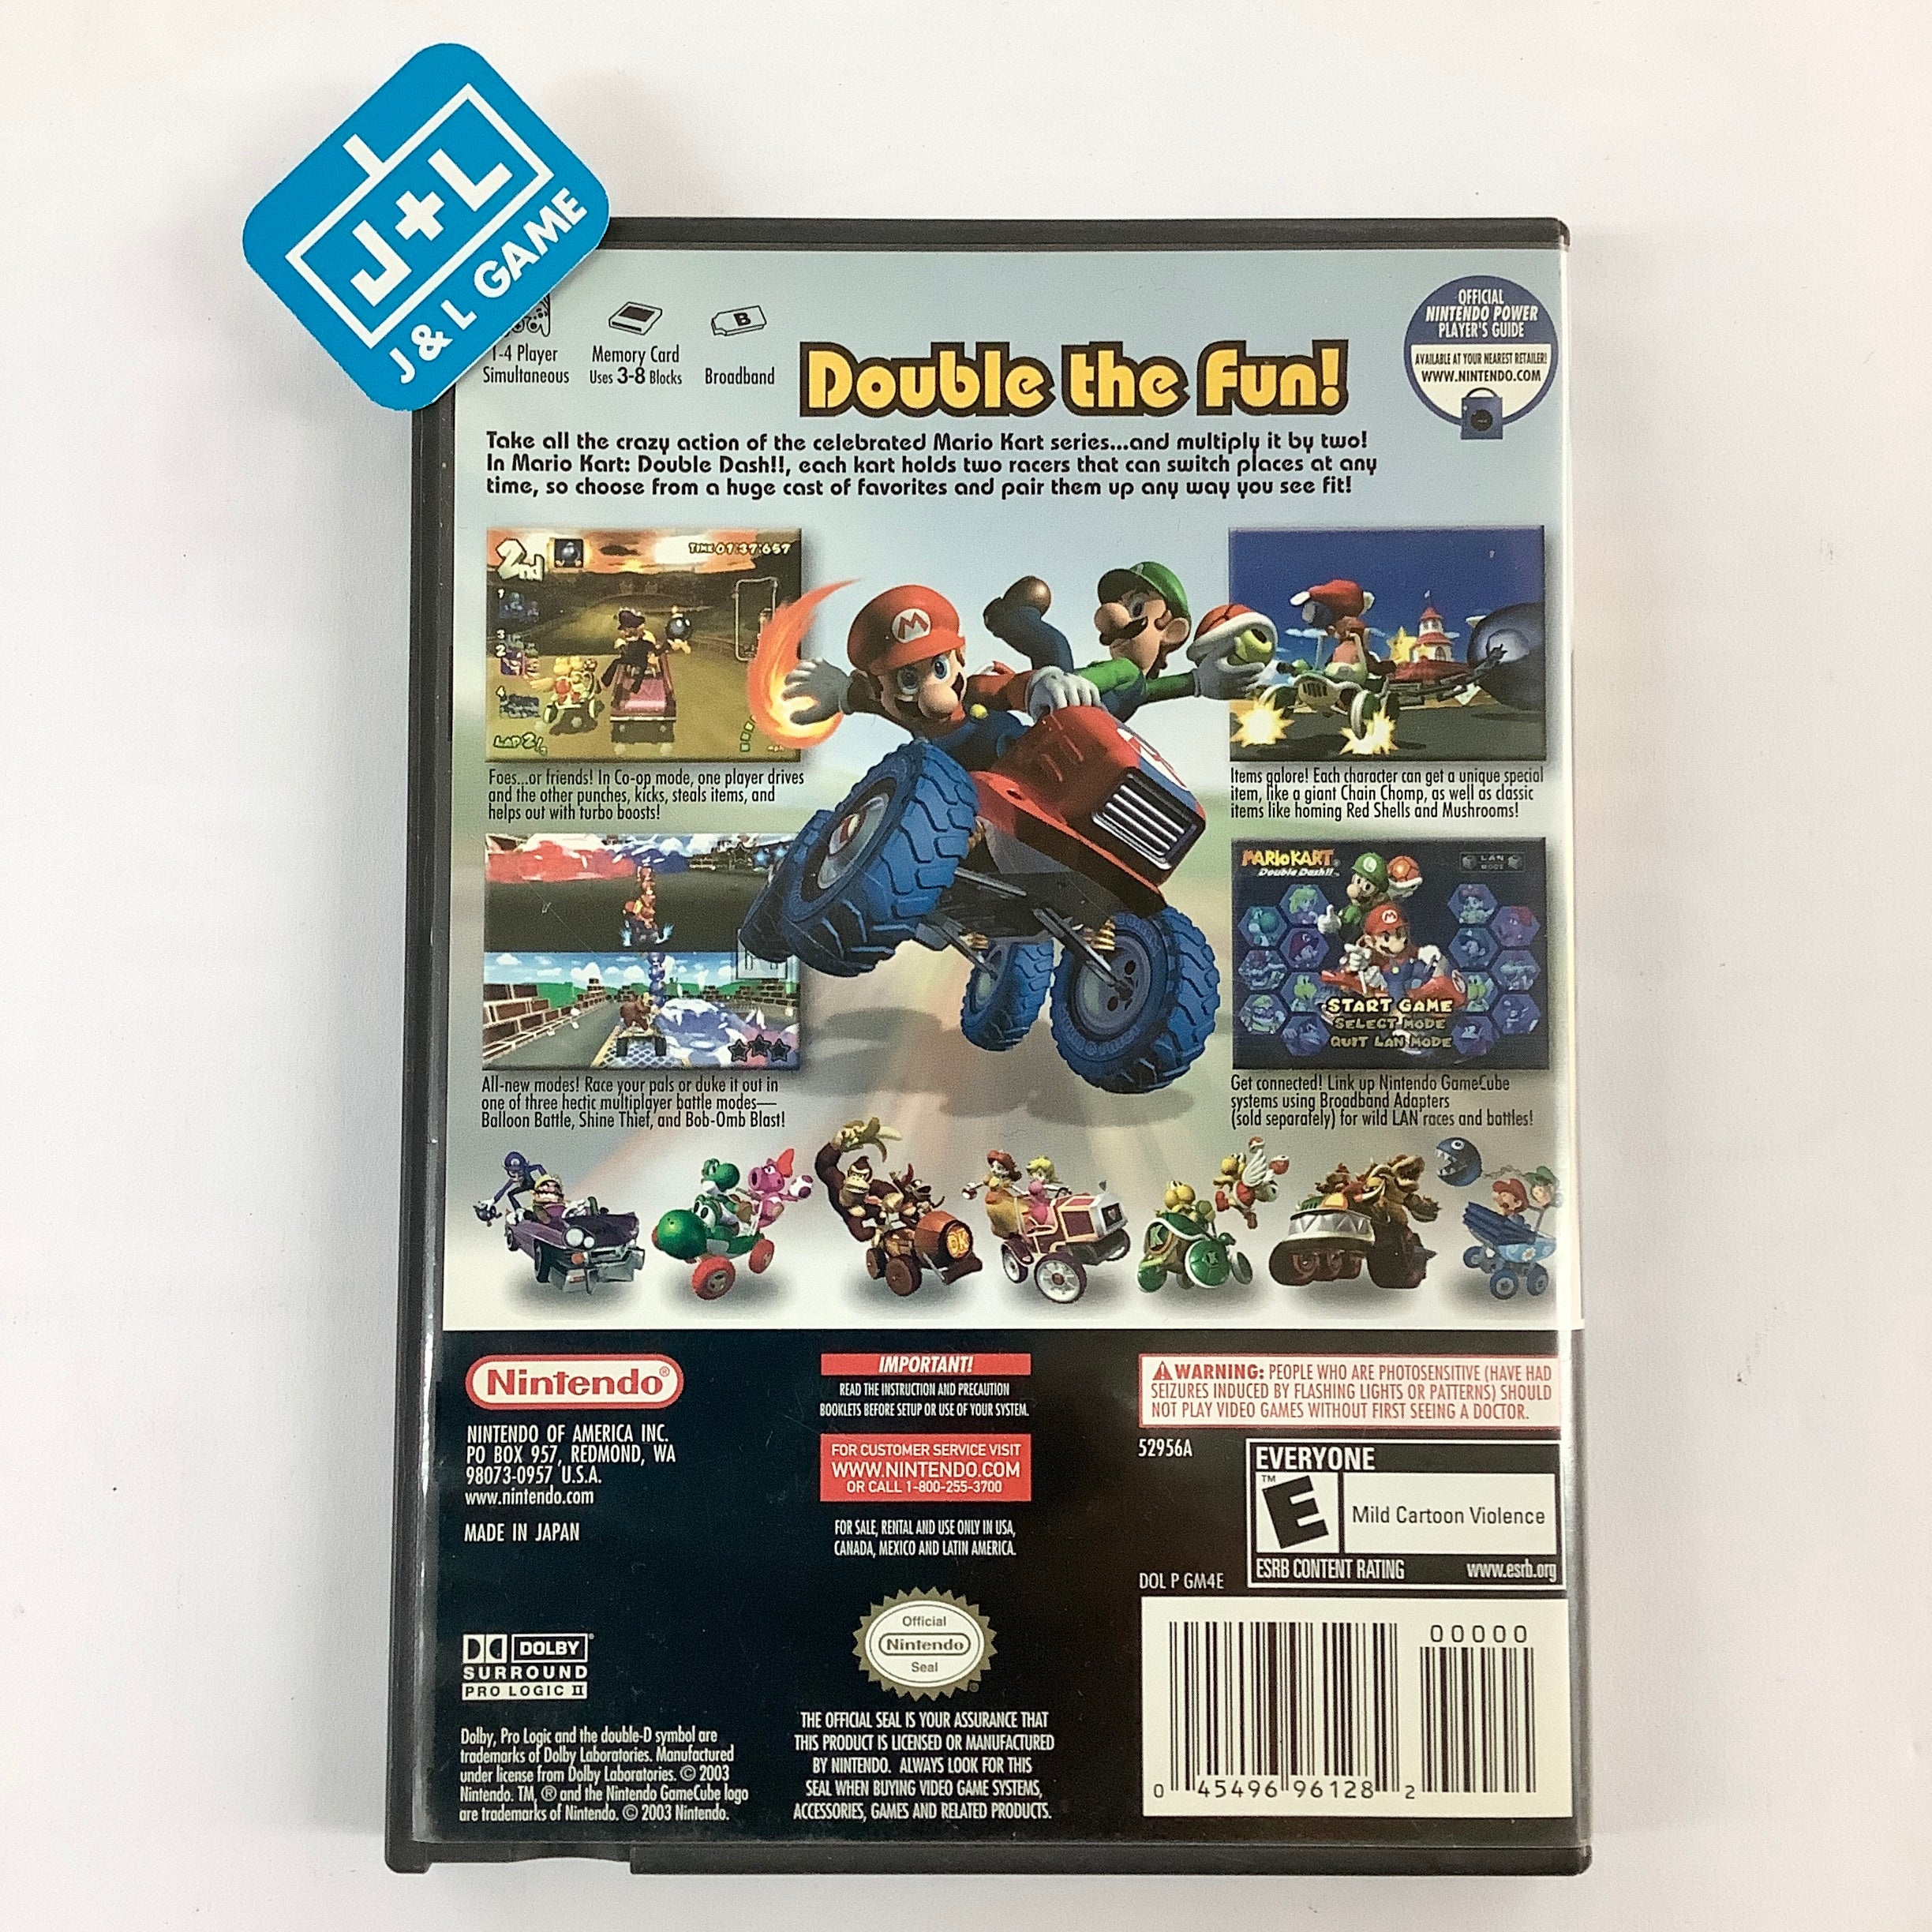 Mario Kart: Double Dash!! - (GC) GameCube [Pre-Owned] Video Games Nintendo   